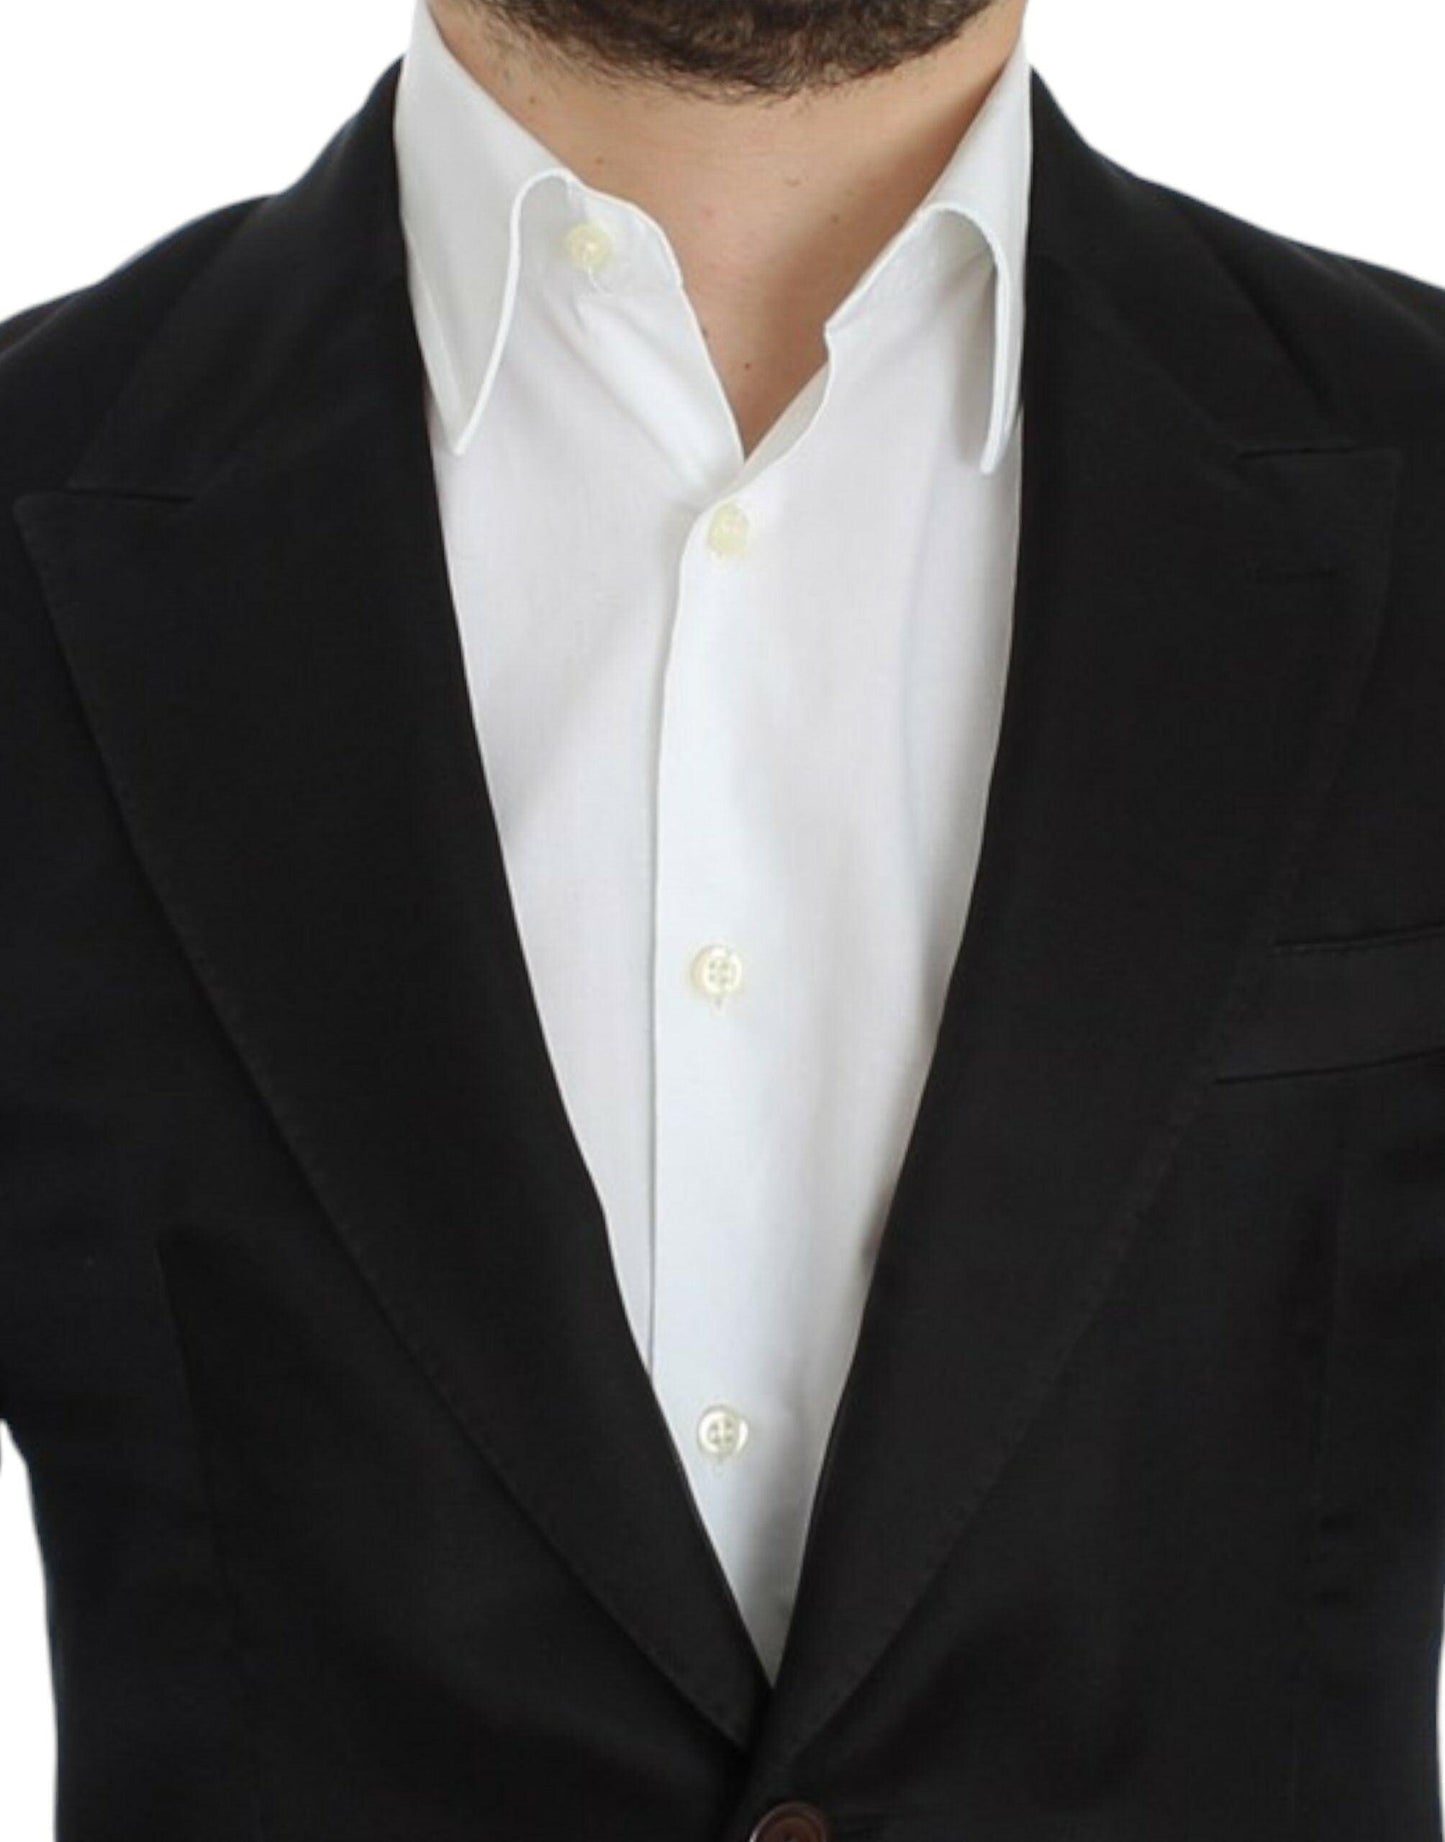 Dolce & Gabbana Elegant Black Silk Blend Two-Button Blazer